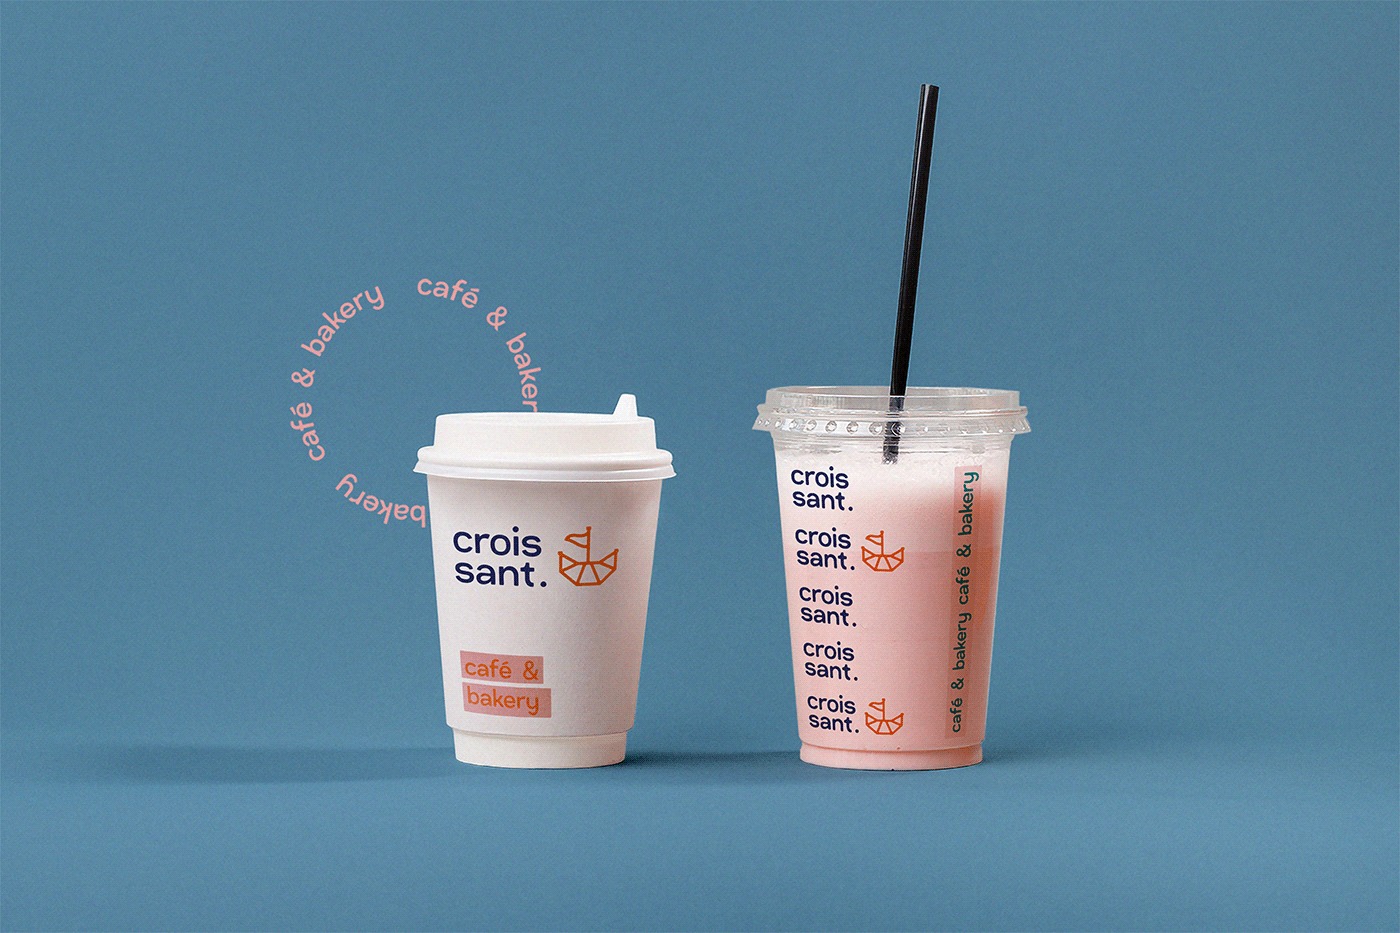 Croissant咖啡面包房品牌形象设计